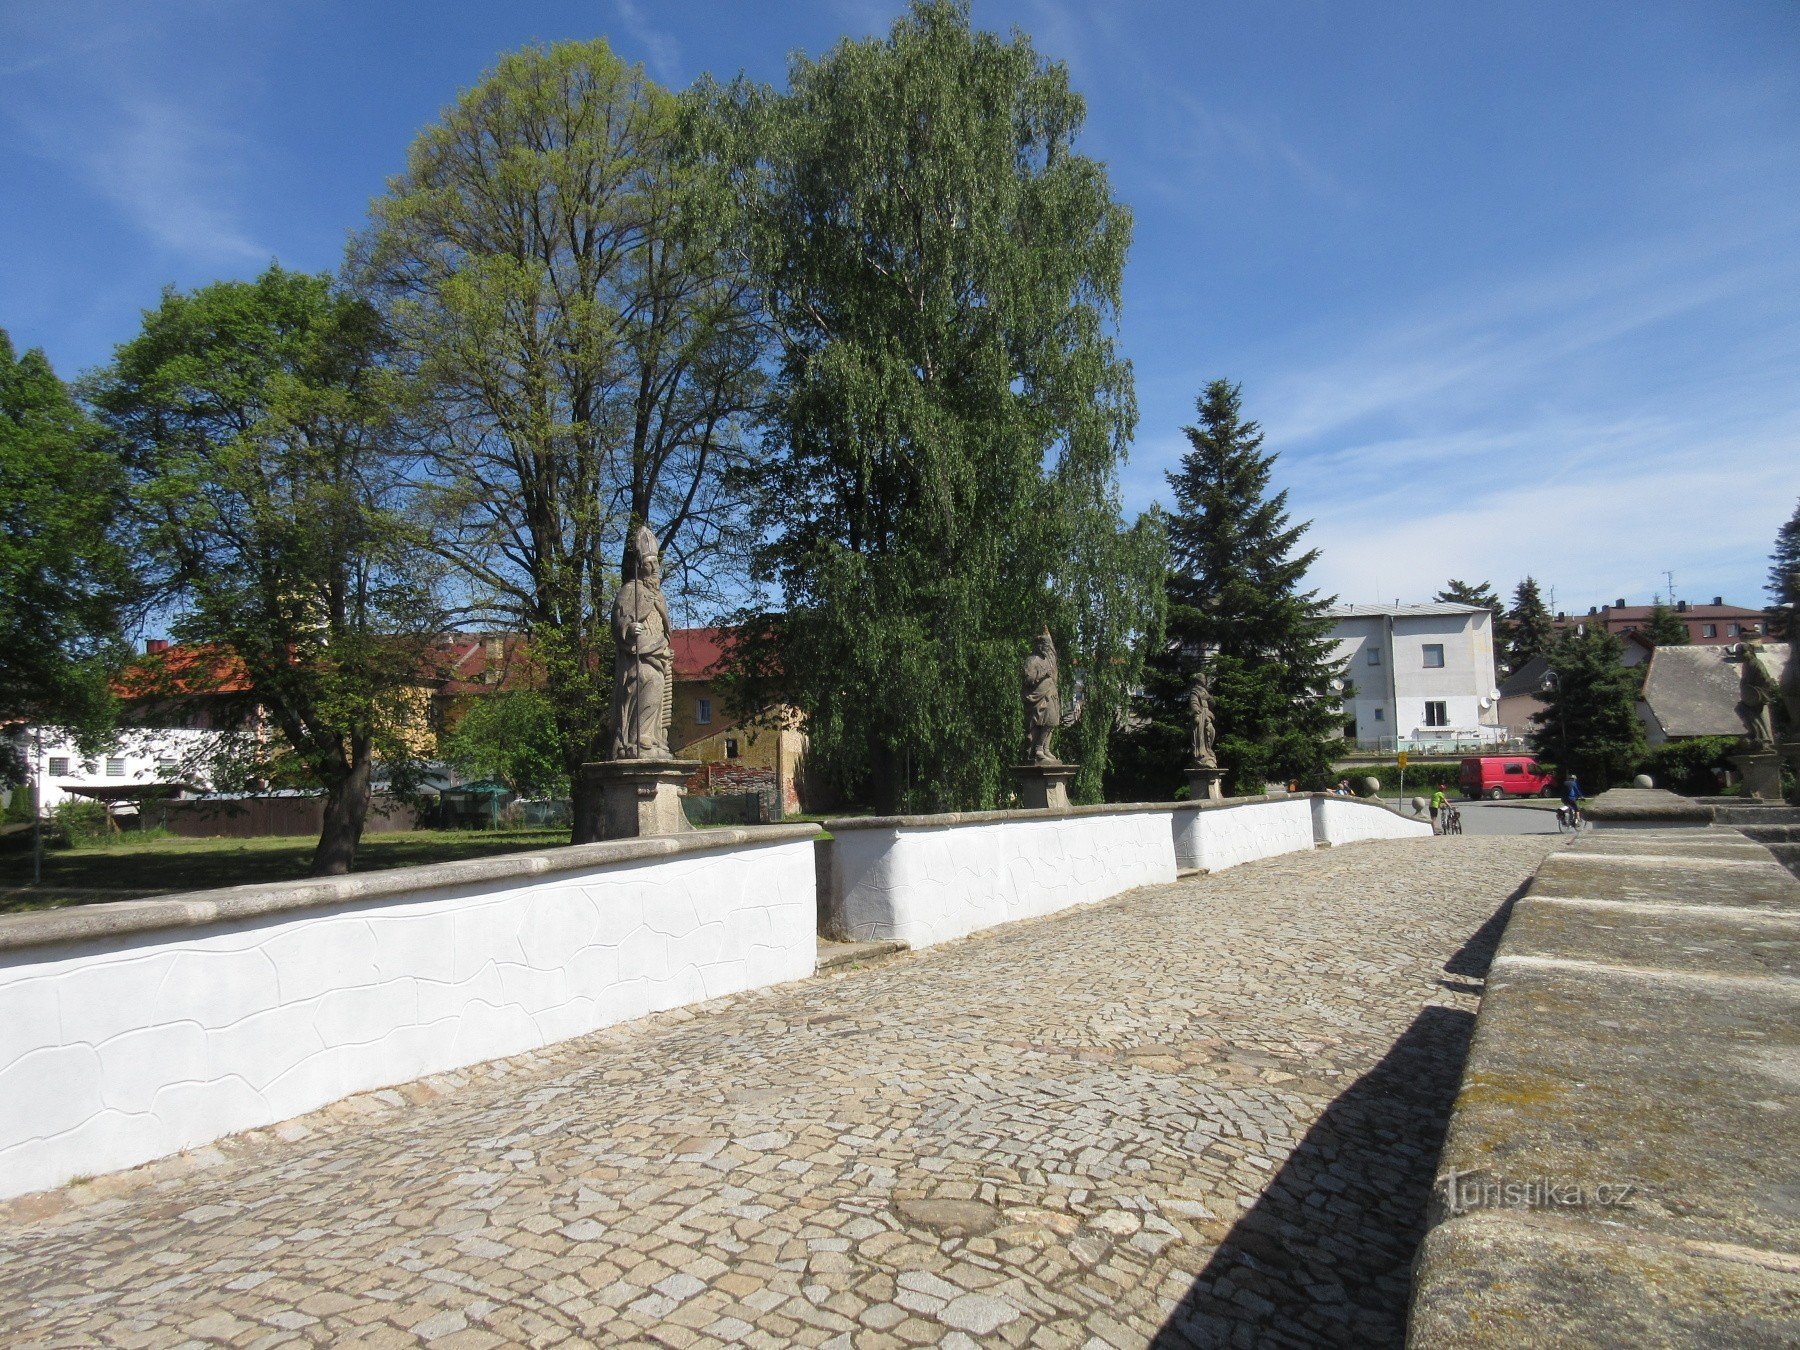 Bělá nad Radbuzou – town and viewpoint